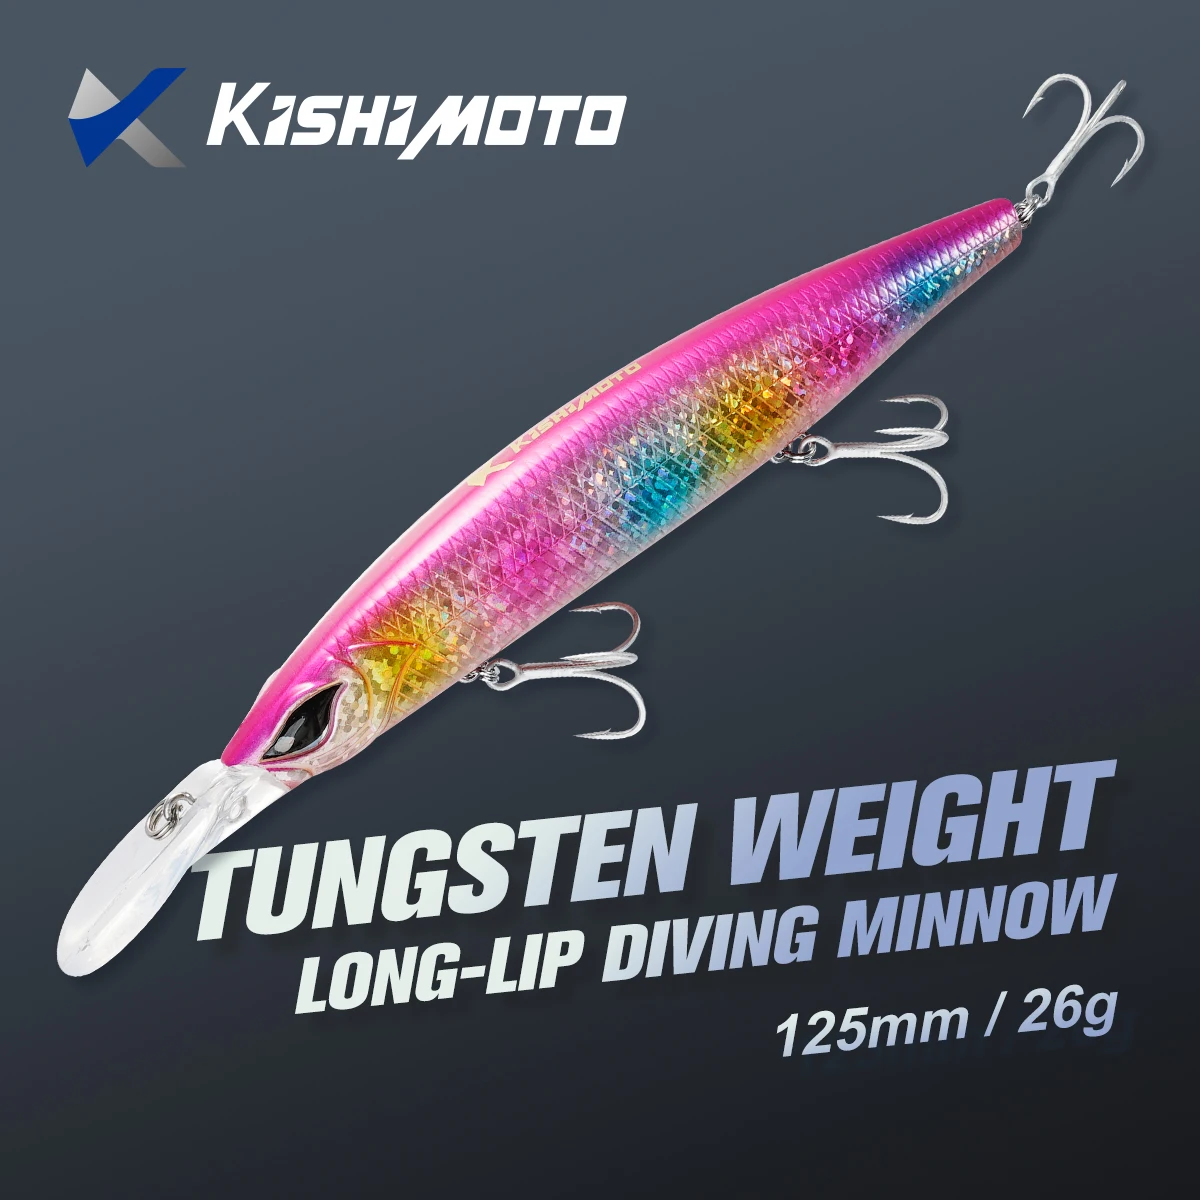 

Kishimoto Jerkbait Minnow 12.5cm 26g Sinking Minnow Fishing Lure Long-Lip Diving Long Casting Artificial Hard Bait Fishing Lure